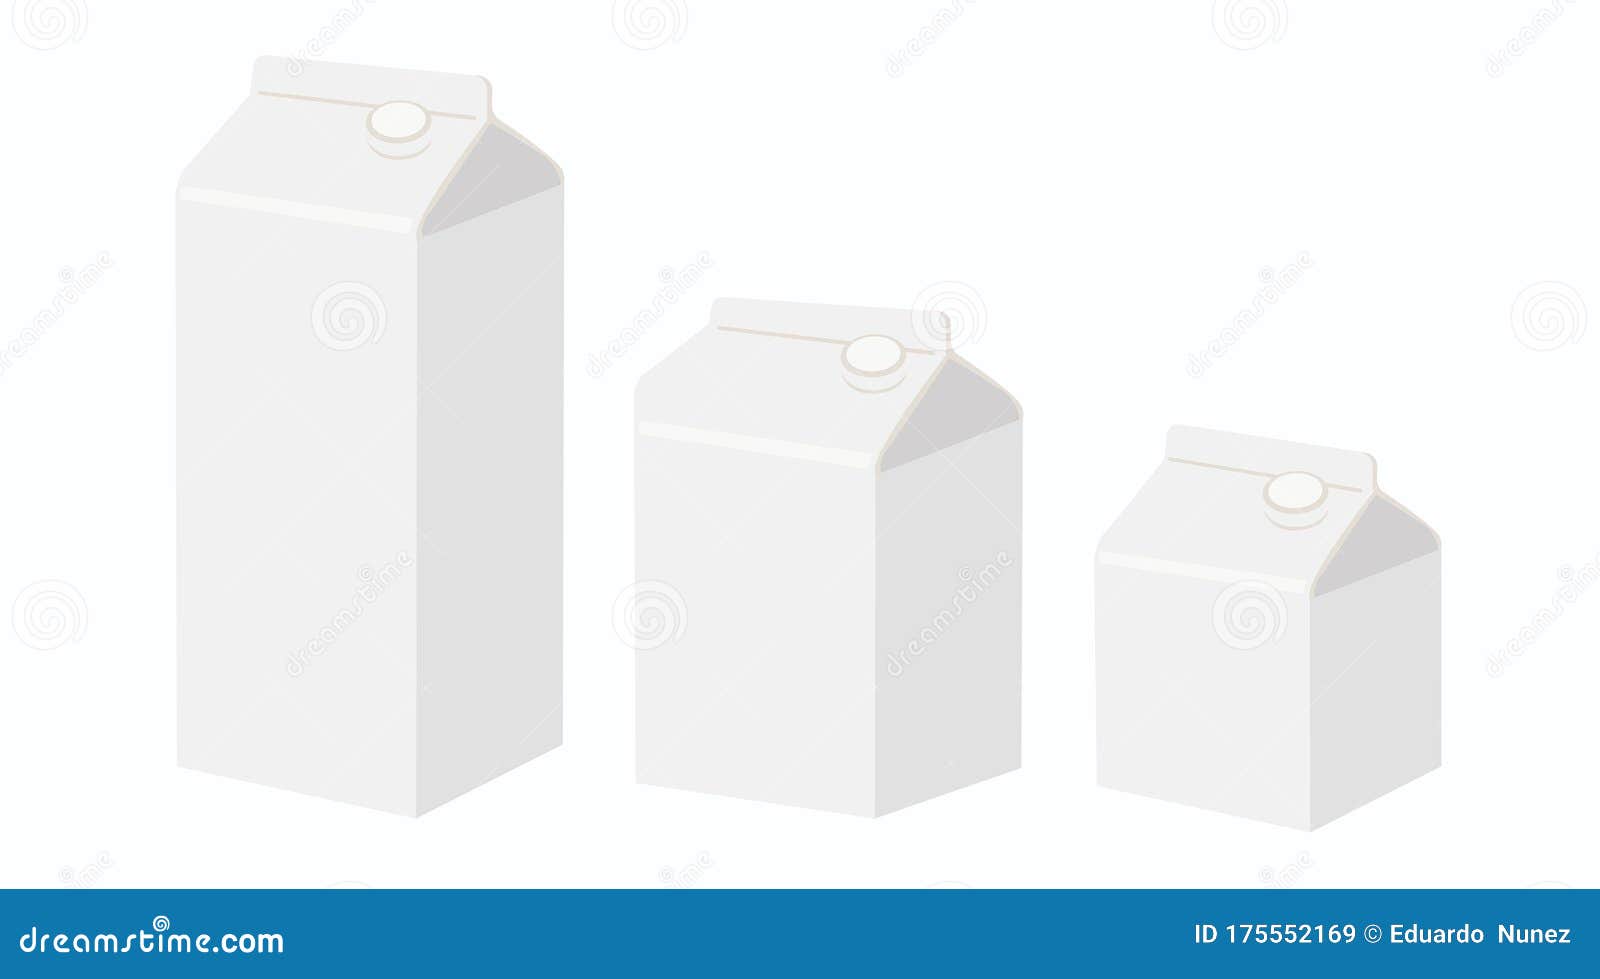 Vector Illustration Of Milk Box Isometric View, Different Sizes Stock Vector Illustration of